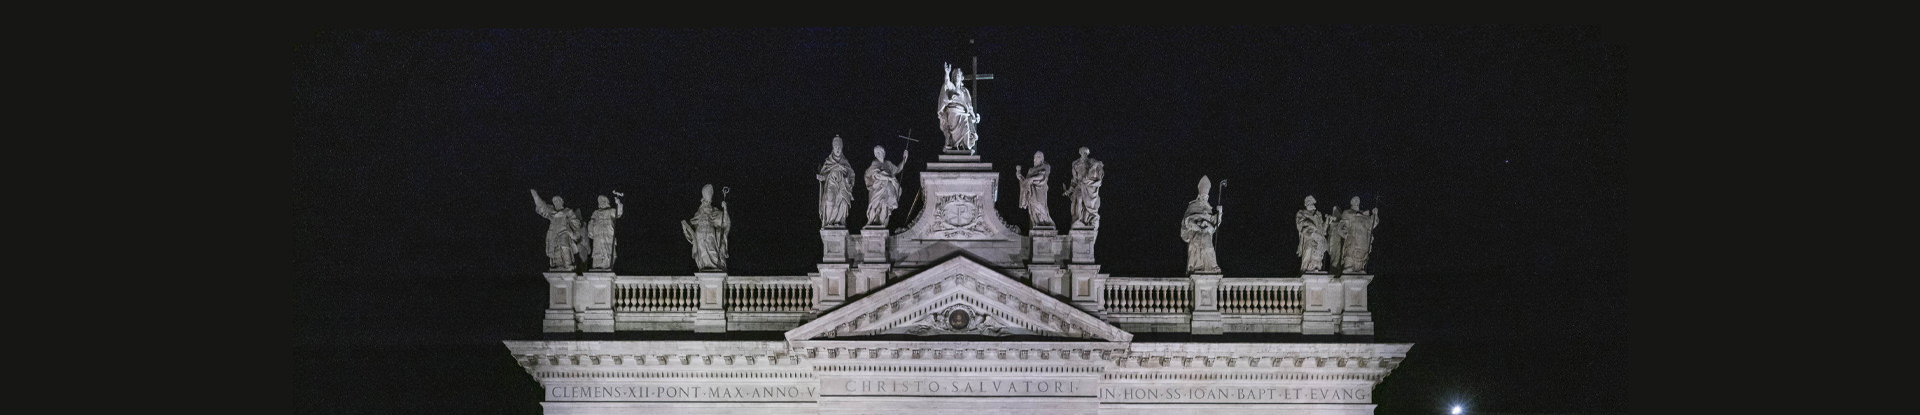 Acea, lighting for Basilica of San Giovanni in Laterano